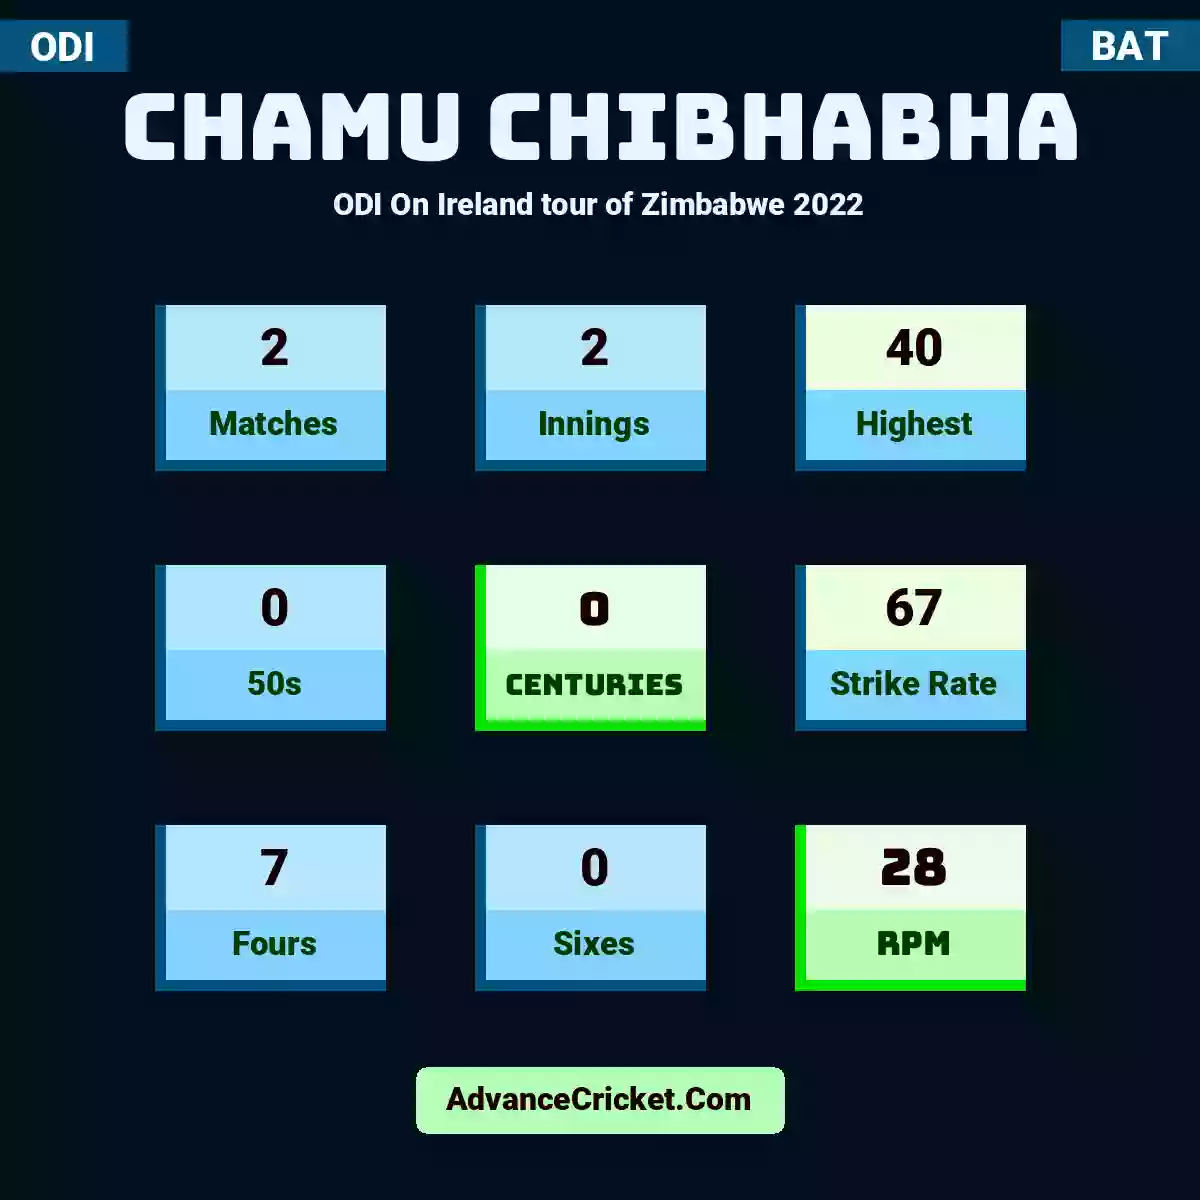 Chamu Chibhabha ODI  On Ireland tour of Zimbabwe 2022, Chamu Chibhabha played 2 matches, scored 40 runs as highest, 0 half-centuries, and 0 centuries, with a strike rate of 67. C.Chibhabha hit 7 fours and 0 sixes, with an RPM of 28.